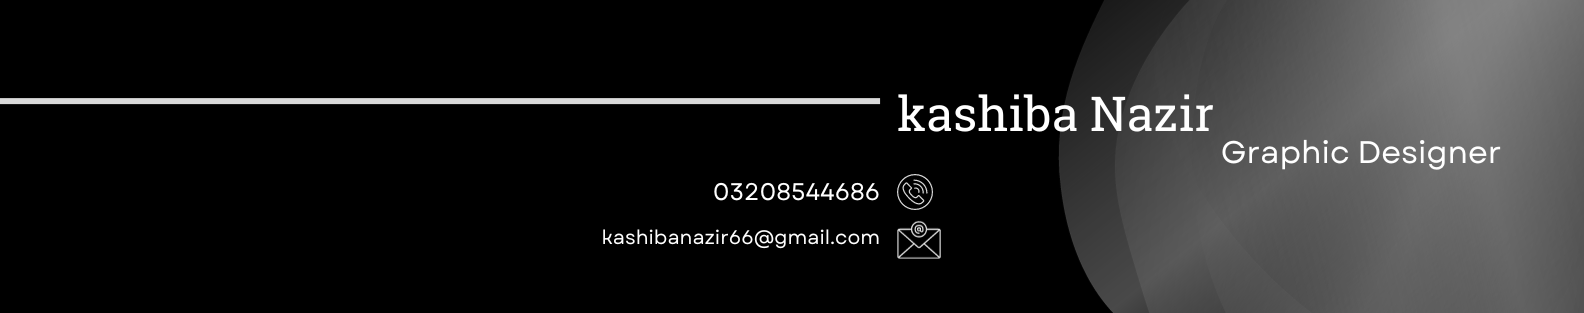 Kashiba Nazir's profile banner